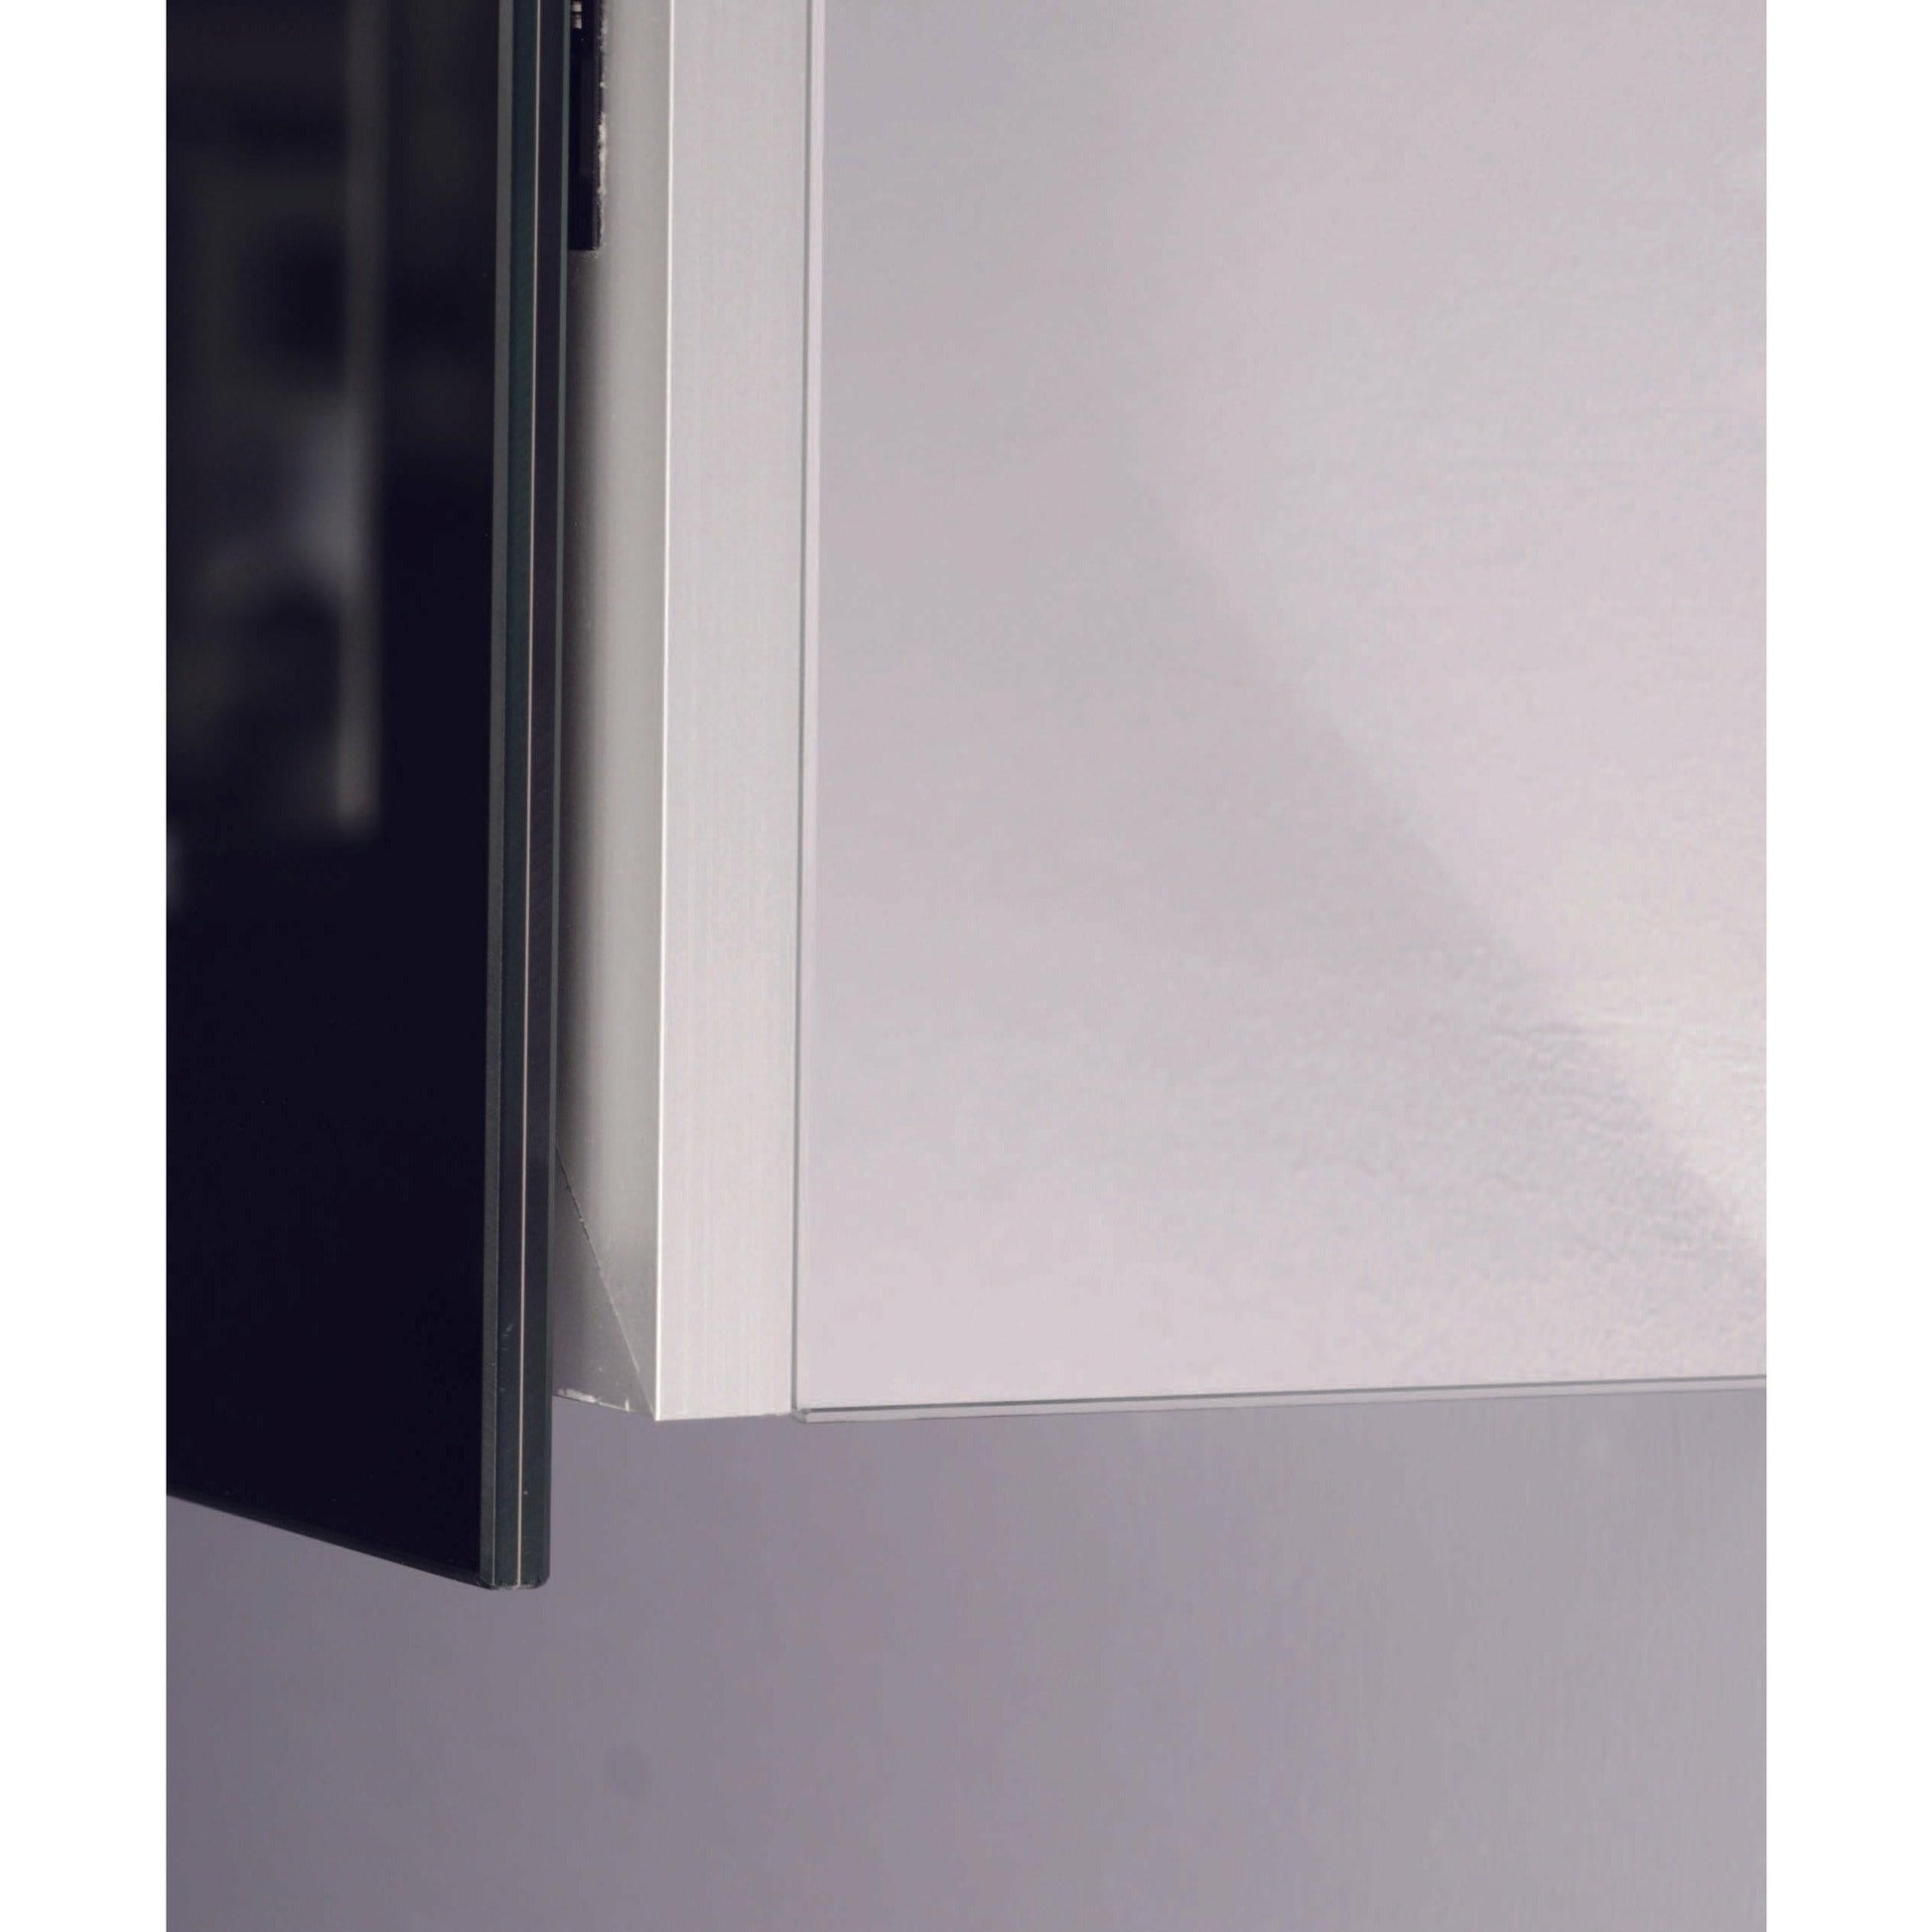 
  
  SIDLER® DIAMANDO™ LED Single Door Medicine Cabinet
  
